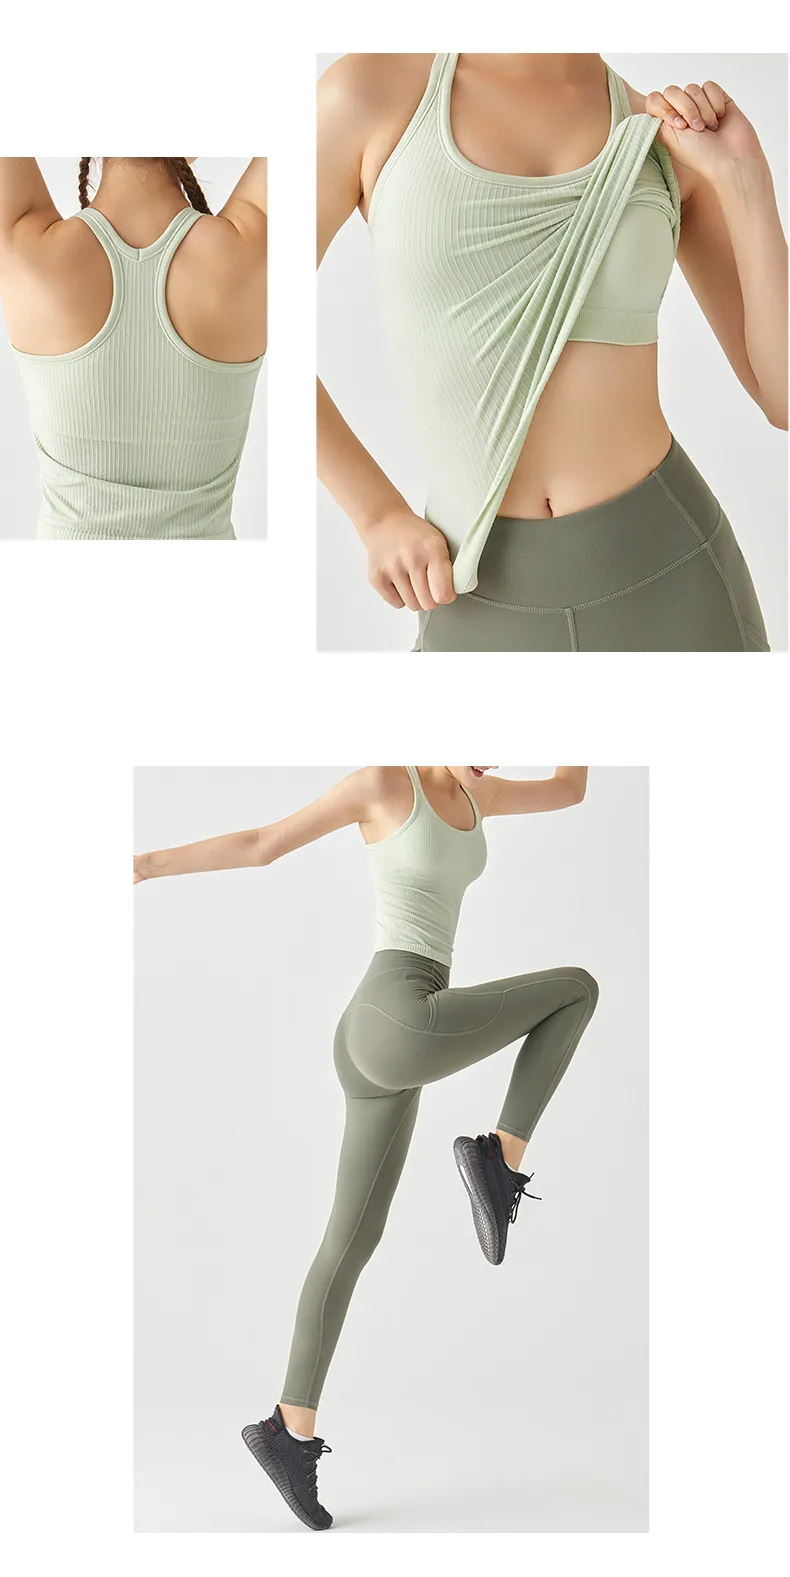 ll align yoga vest tank tops fitness sleeveless sports shirts slim ribbed running gym vest bra top blouses